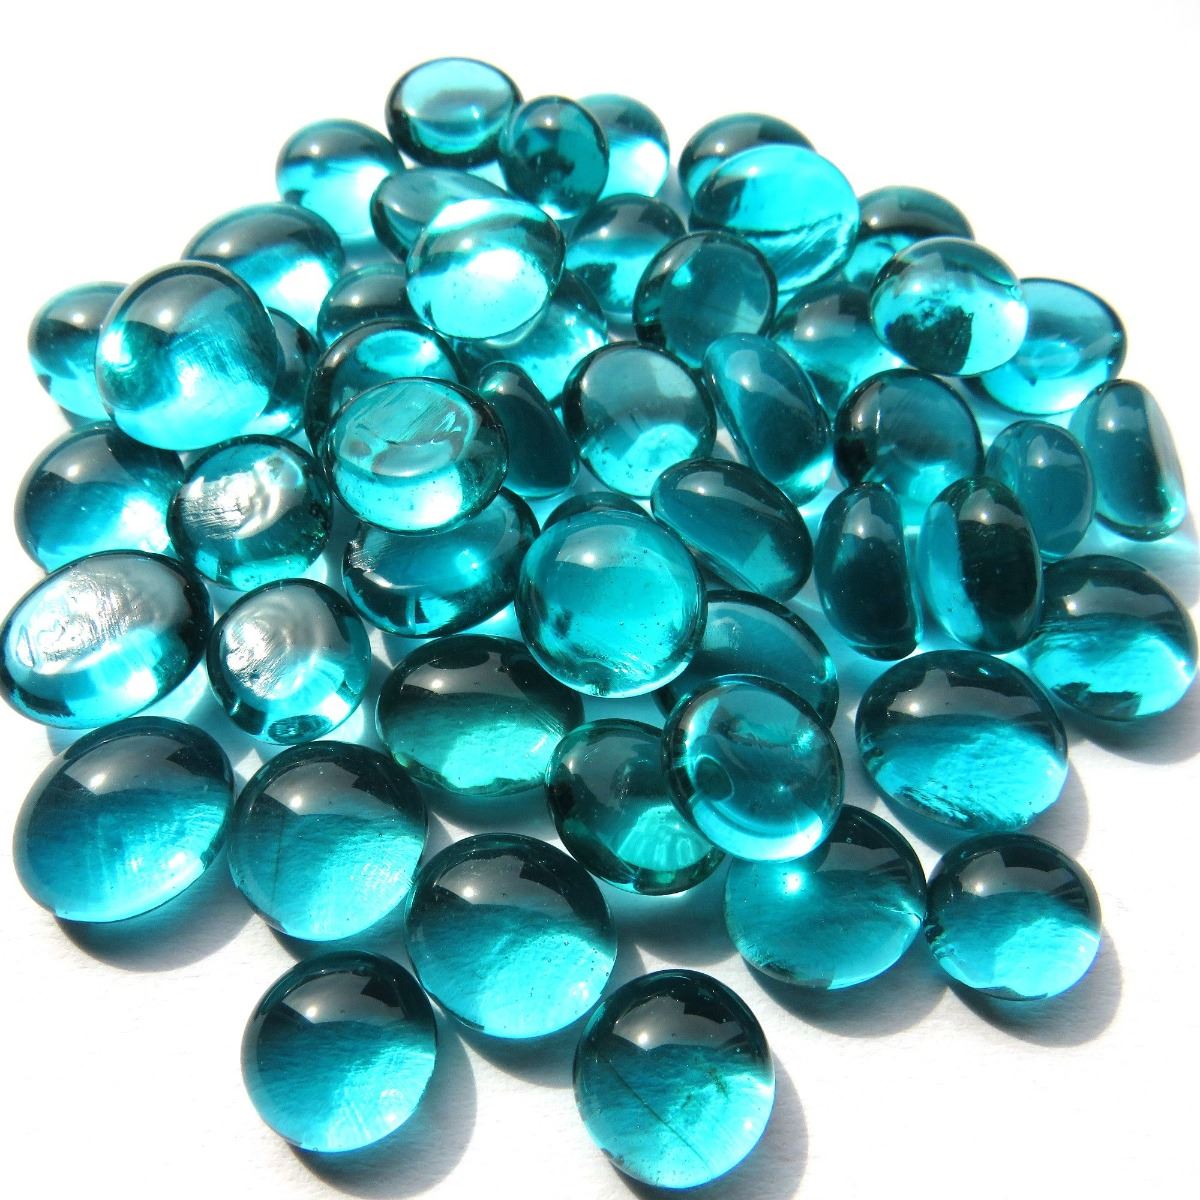 Mini Gems - Teal Crystal